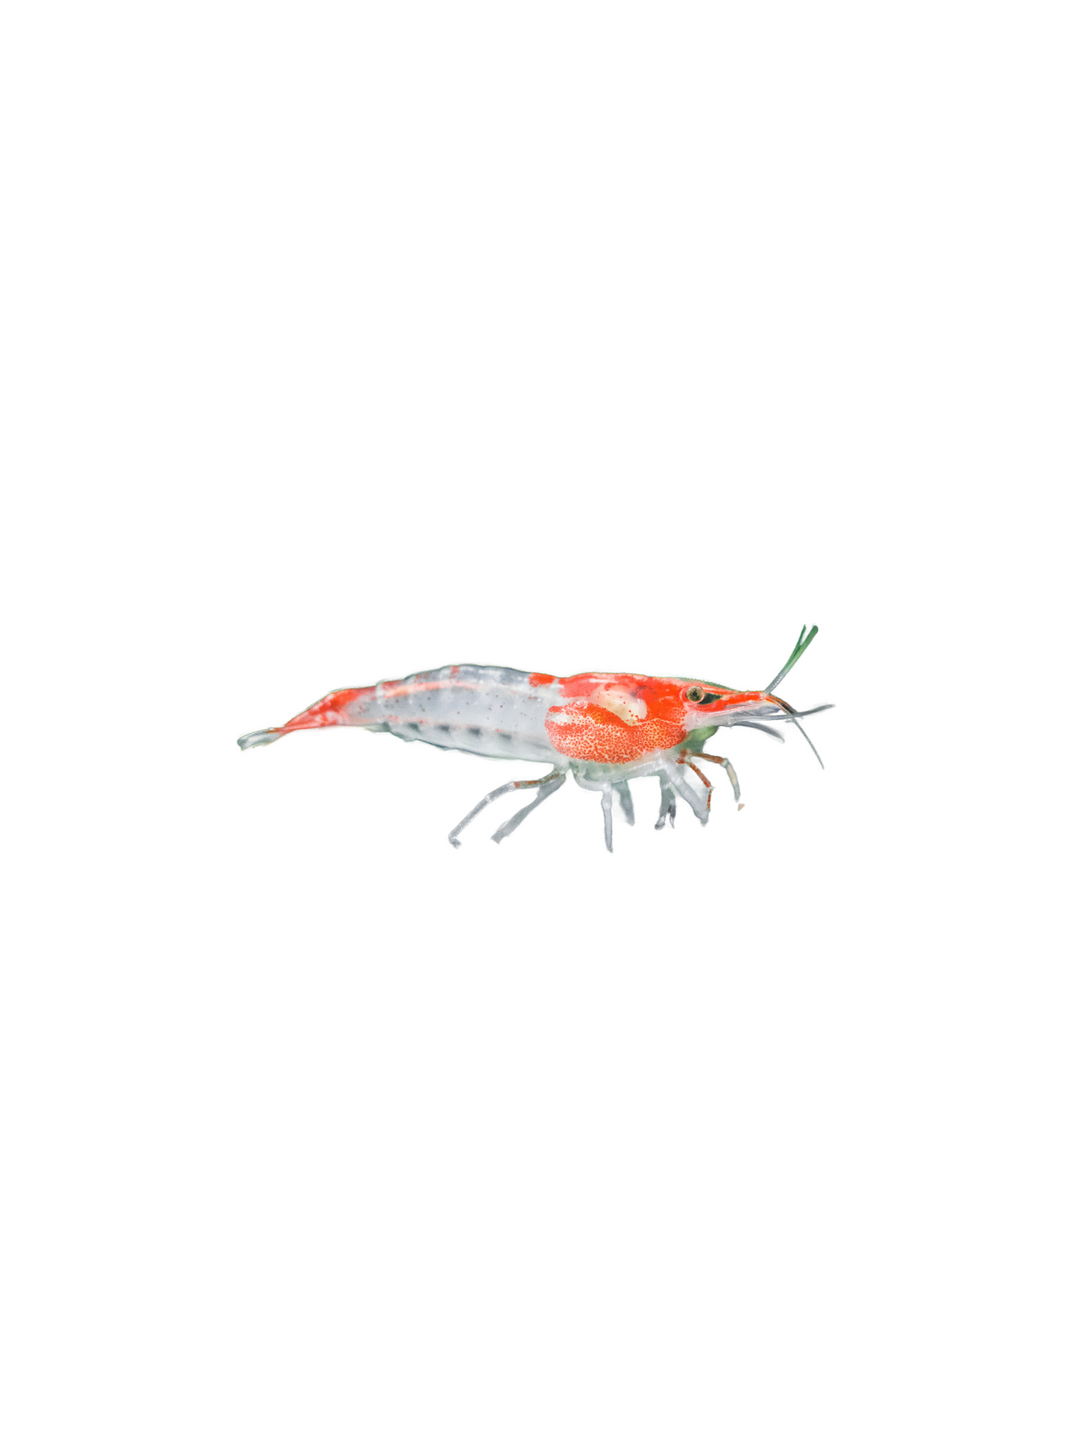 Red Rilli Shrimp